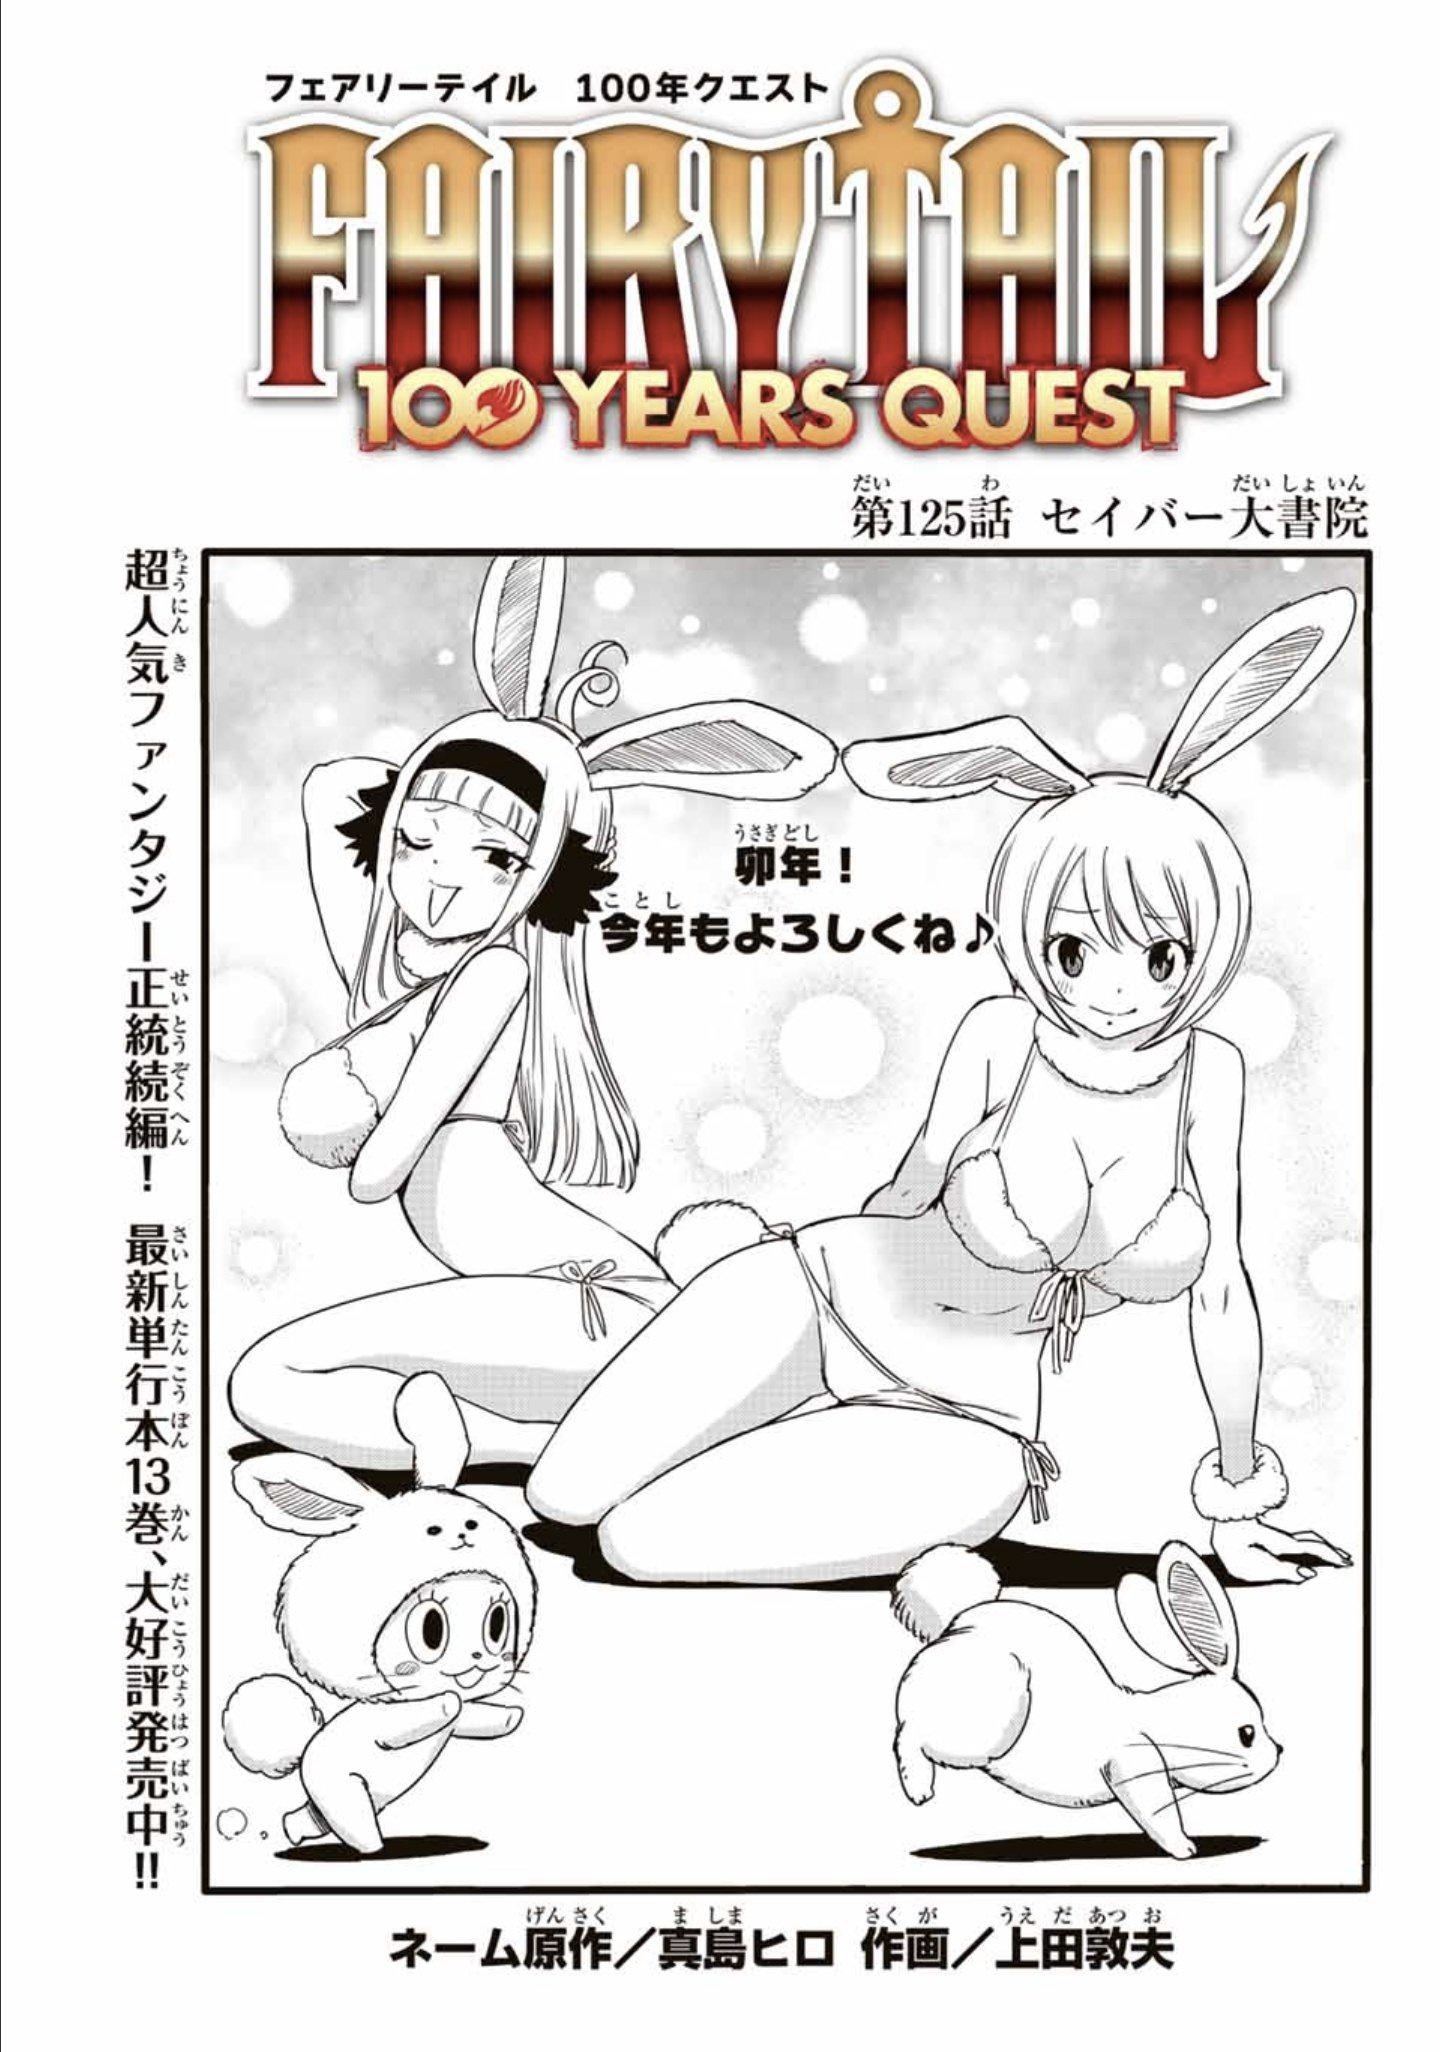 FAIRY TAIL: 100 Years Quest 11: Mashima, Hiro, Ueda, Atsuo